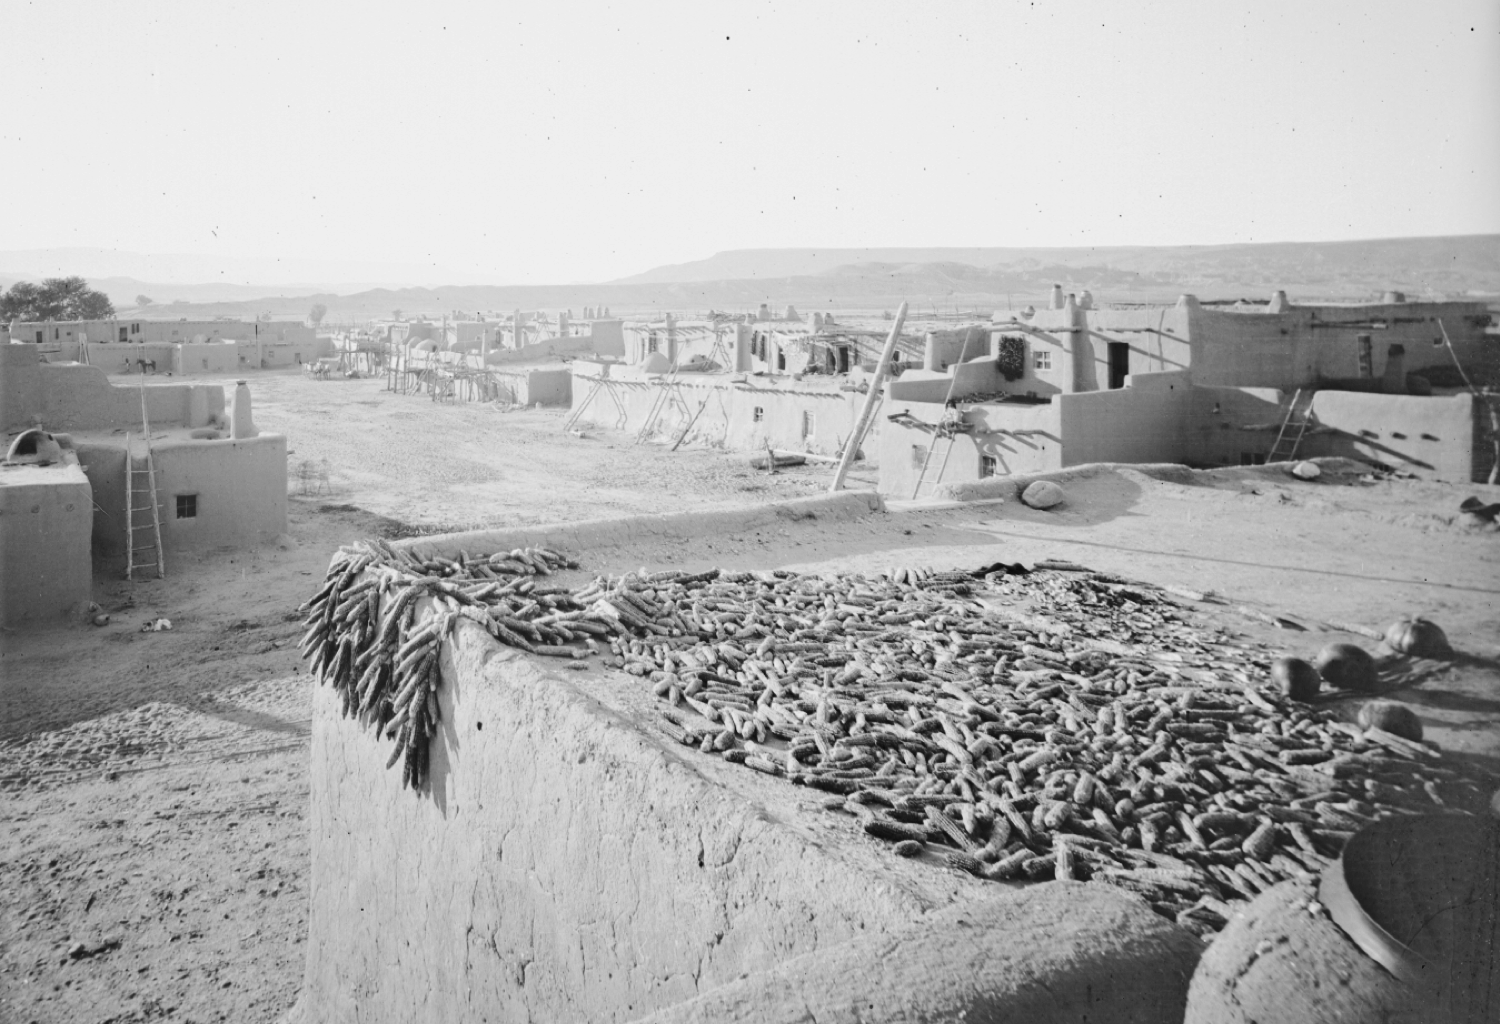 View of Ohkay Owingeh, then known as San Juan Pueblo, in 1877